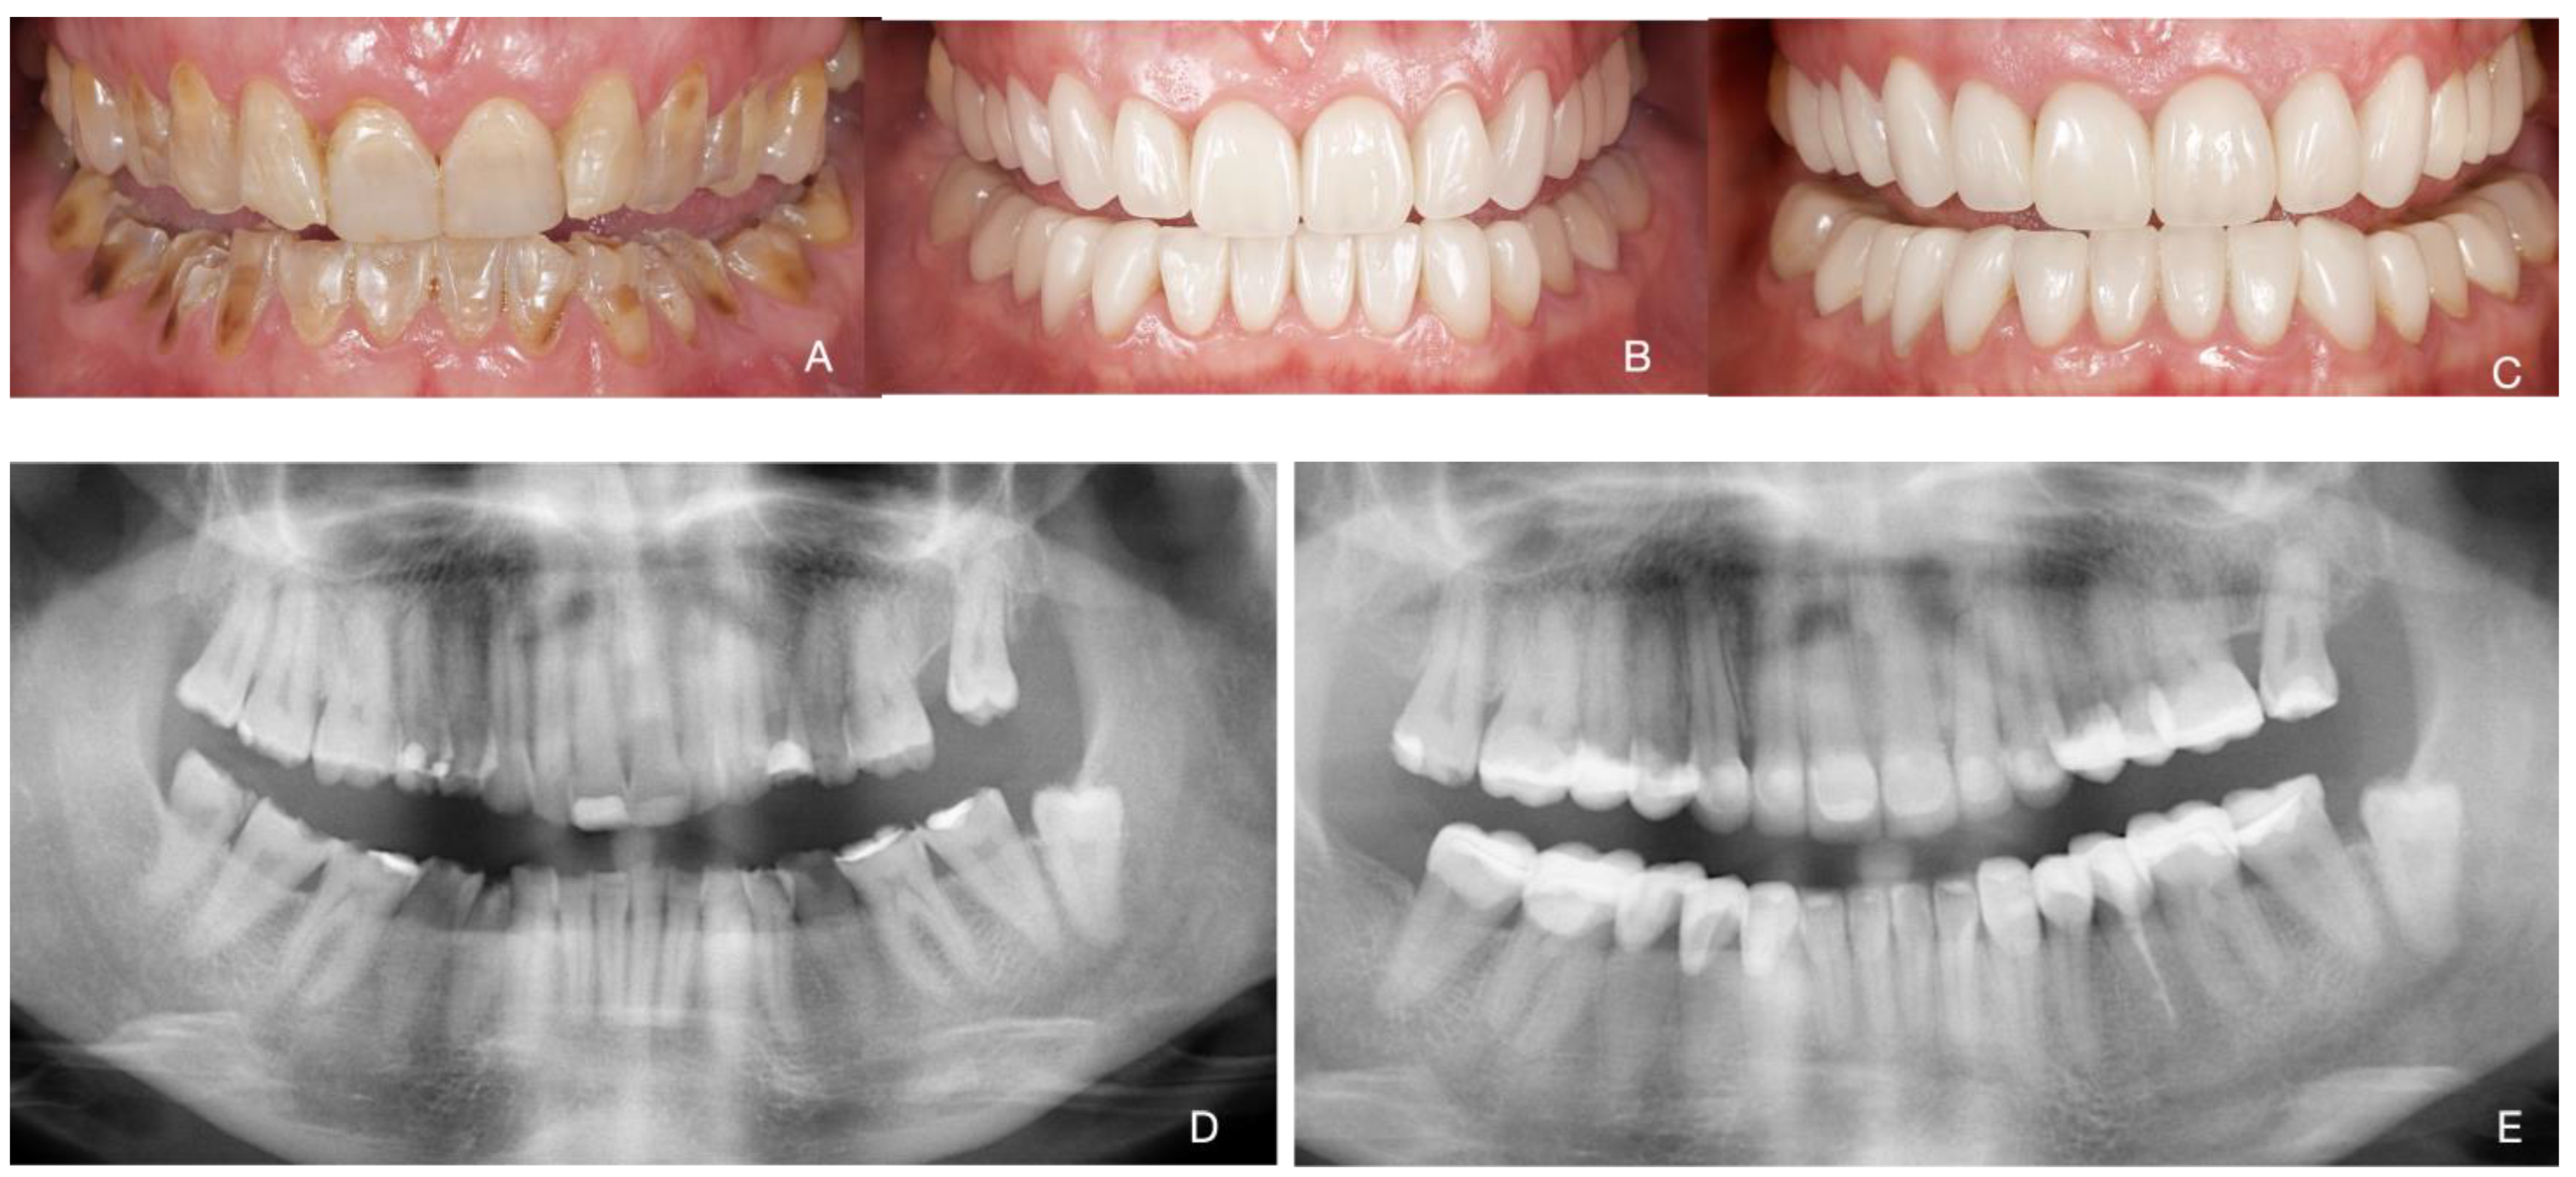 Dental Implants: A Permanent Solution for Missing Teeth in Cuenca, Ecuador  